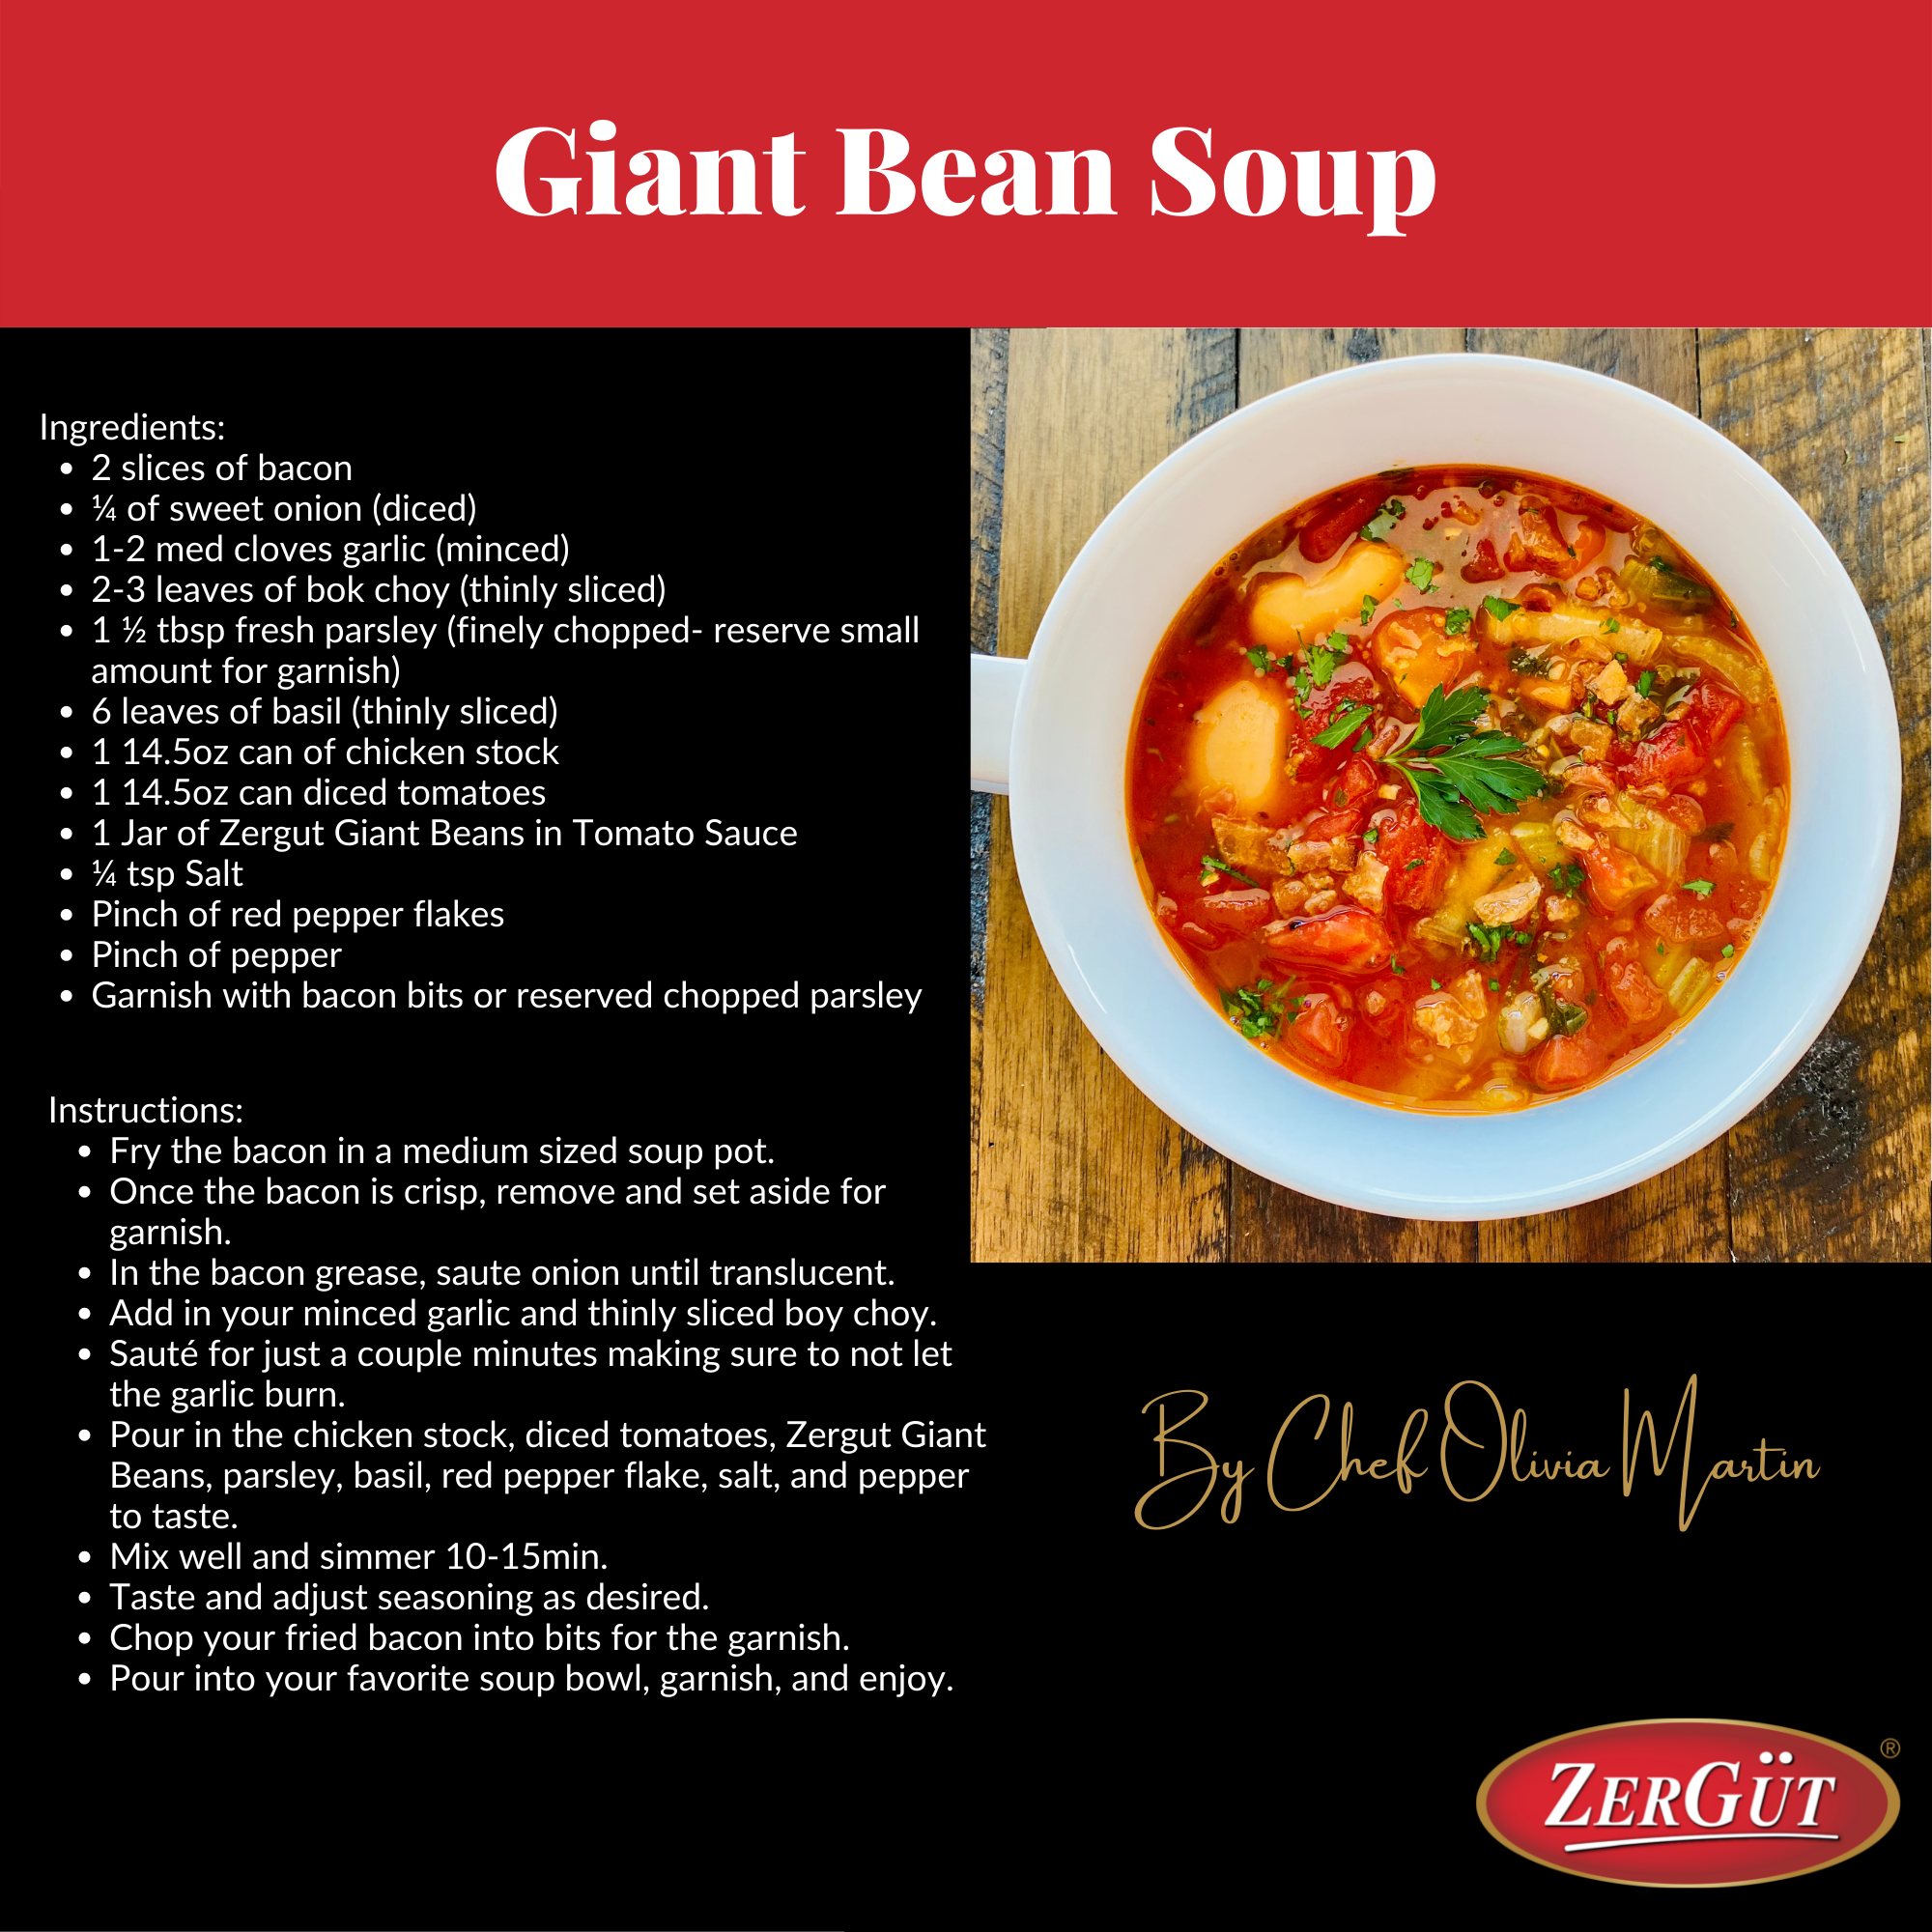 Giant Bean Soup Recipe